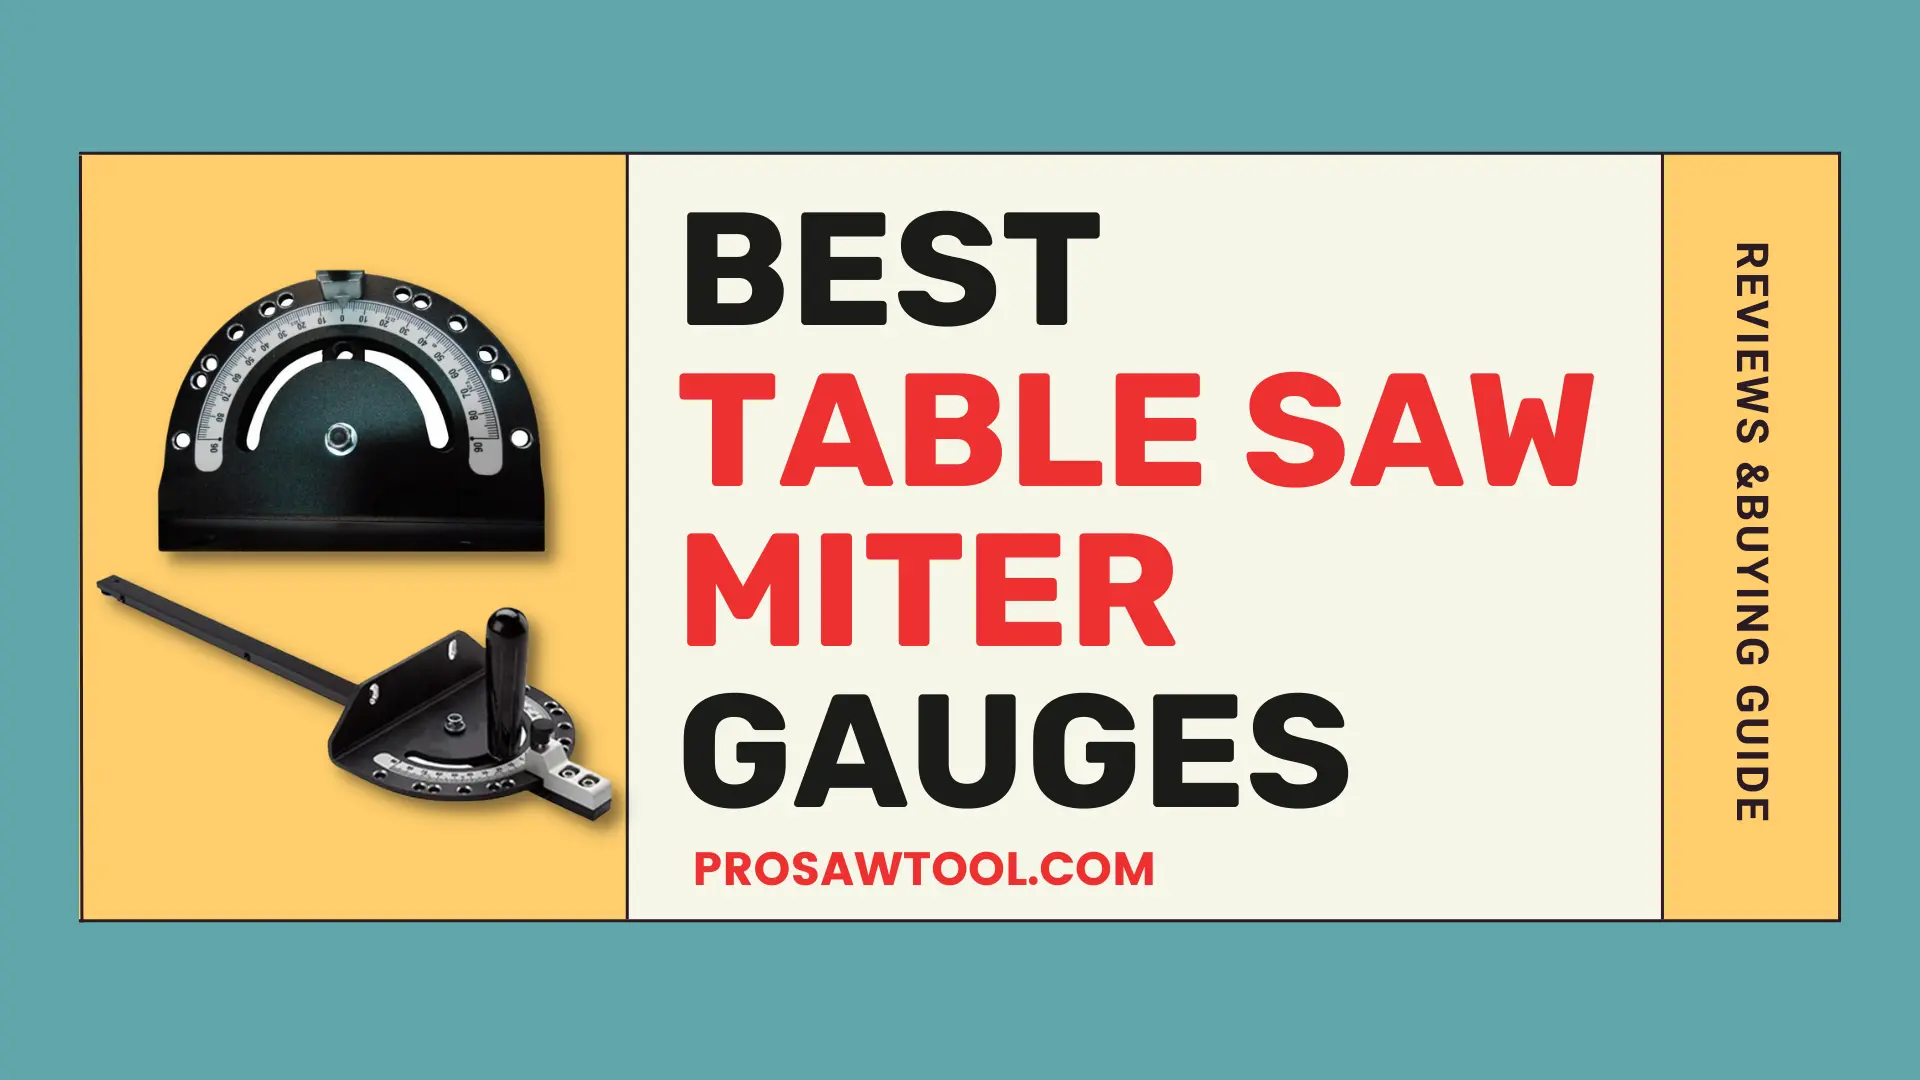 Best Table Saw Miter Gauges